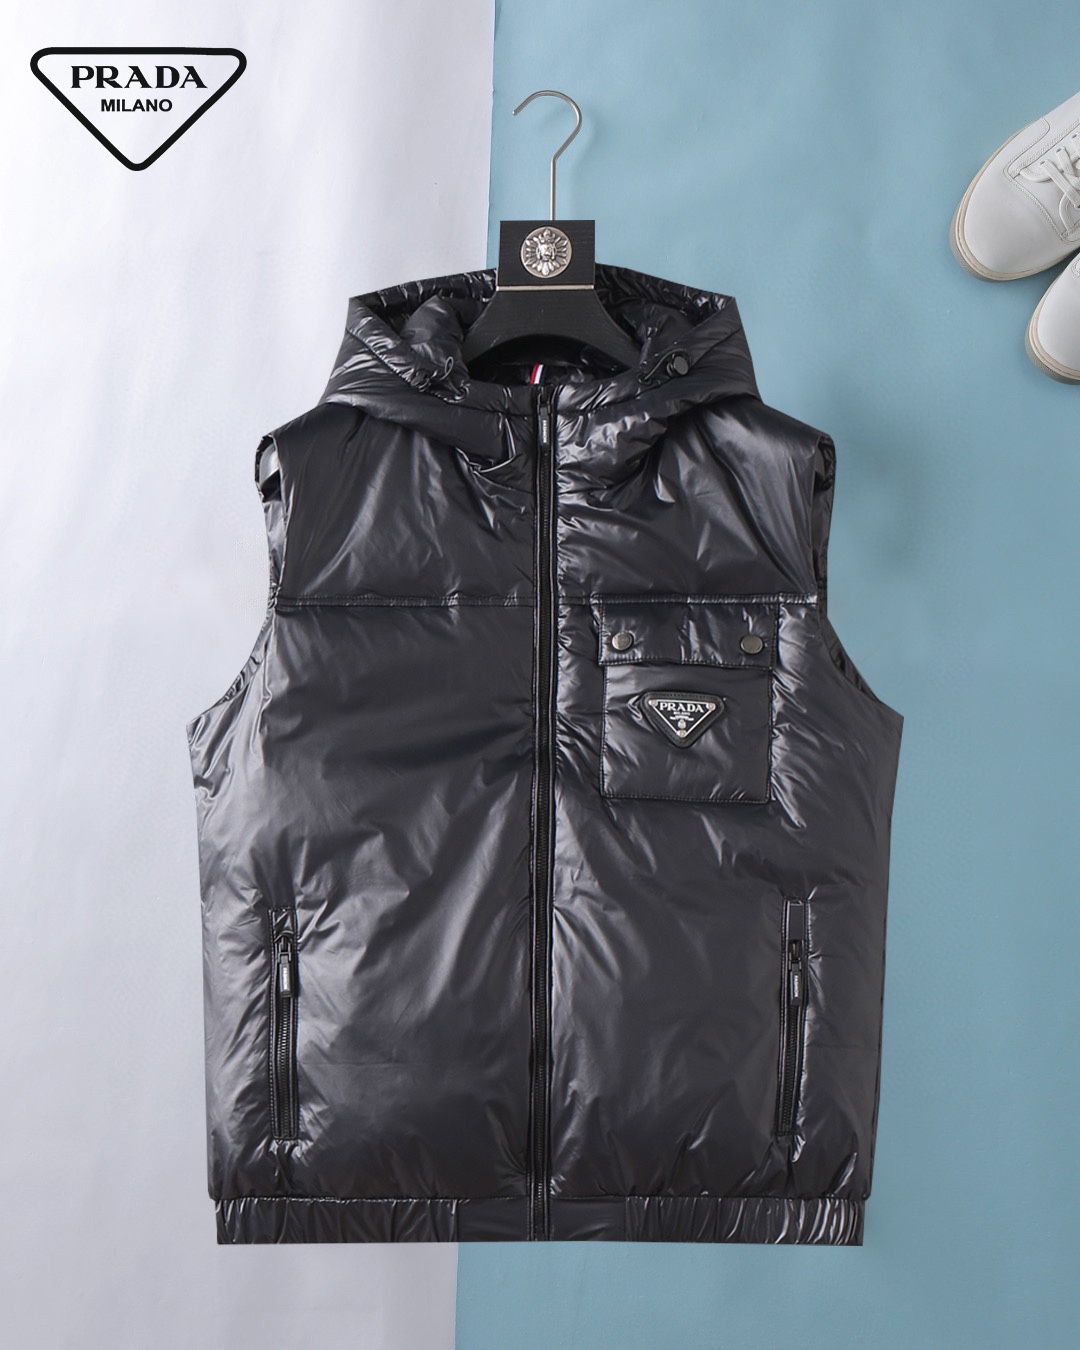 Fashion Replica Prada Clothing Coats & Jackets Waistcoat Men Cotton Fall/Winter Collection Casual